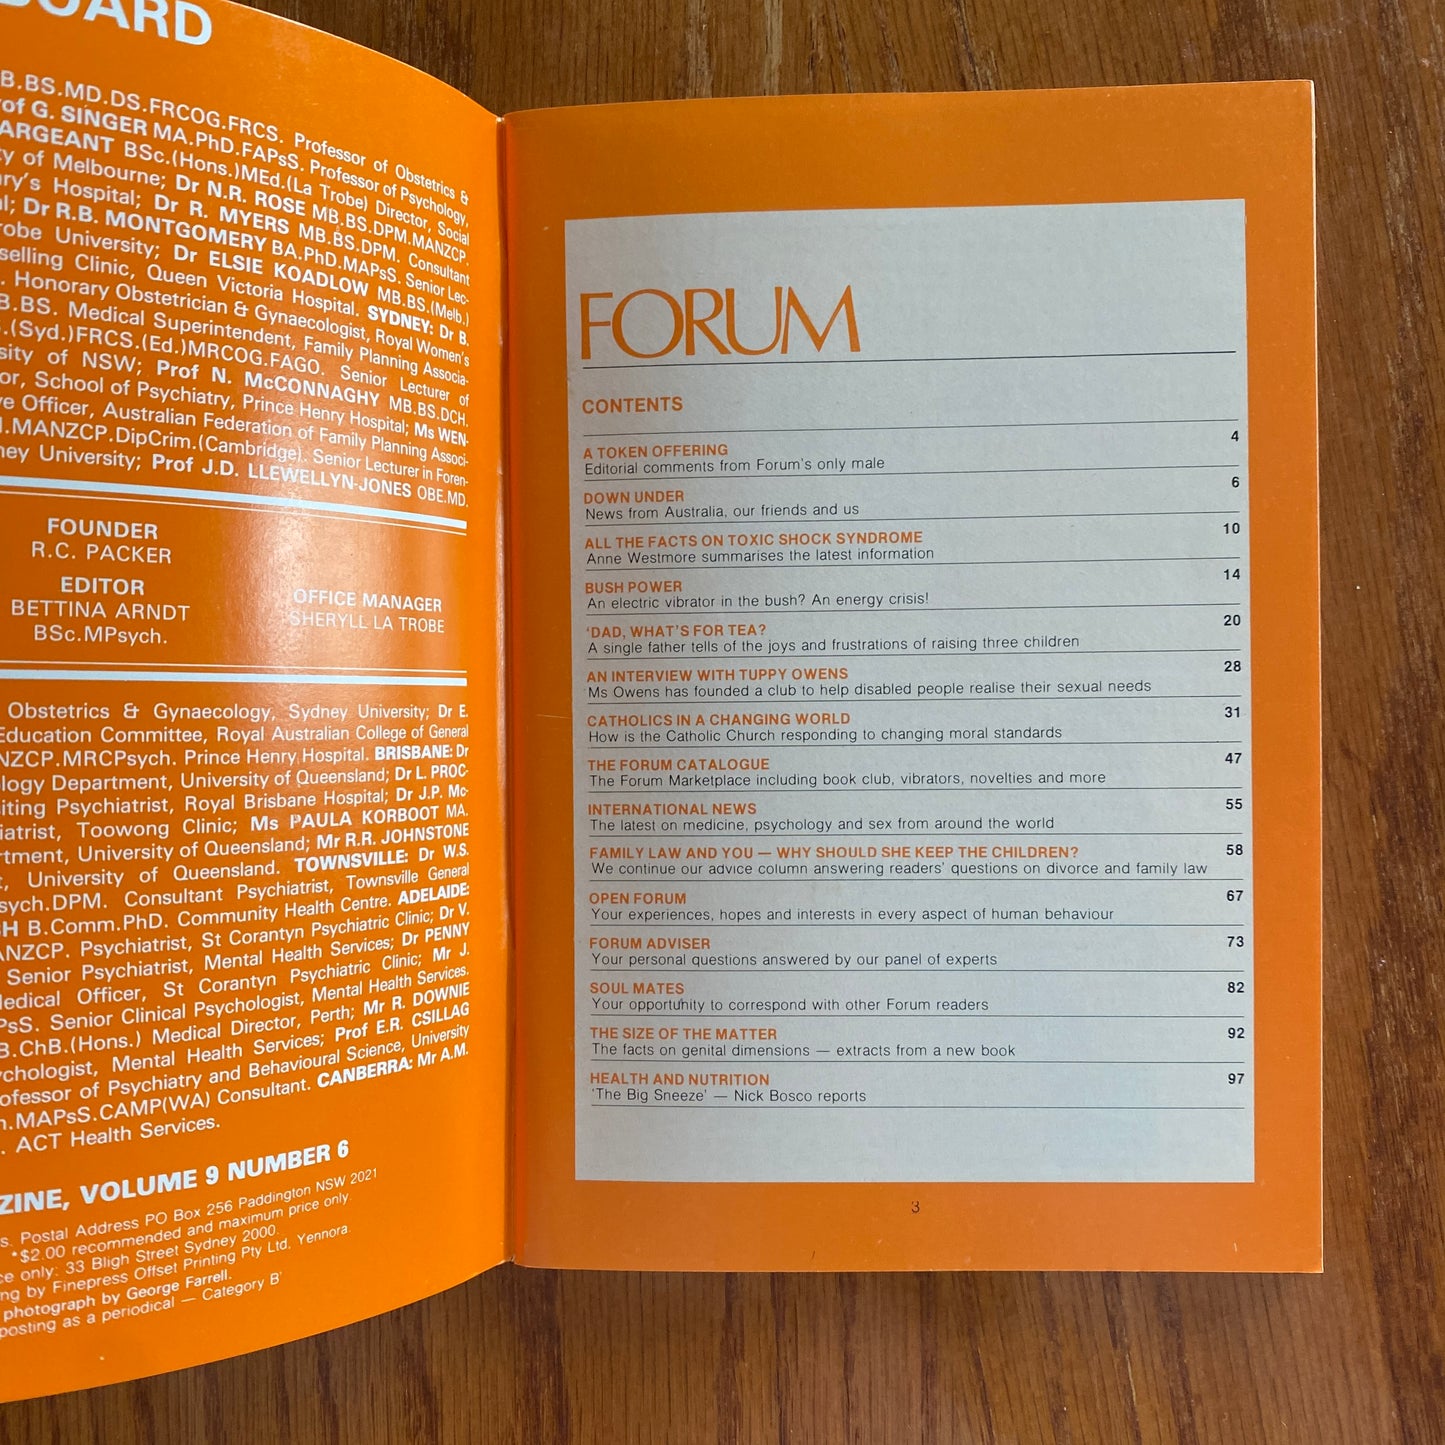 Forum: The Australian Journal of interpersonal Relations - V9#6 1981